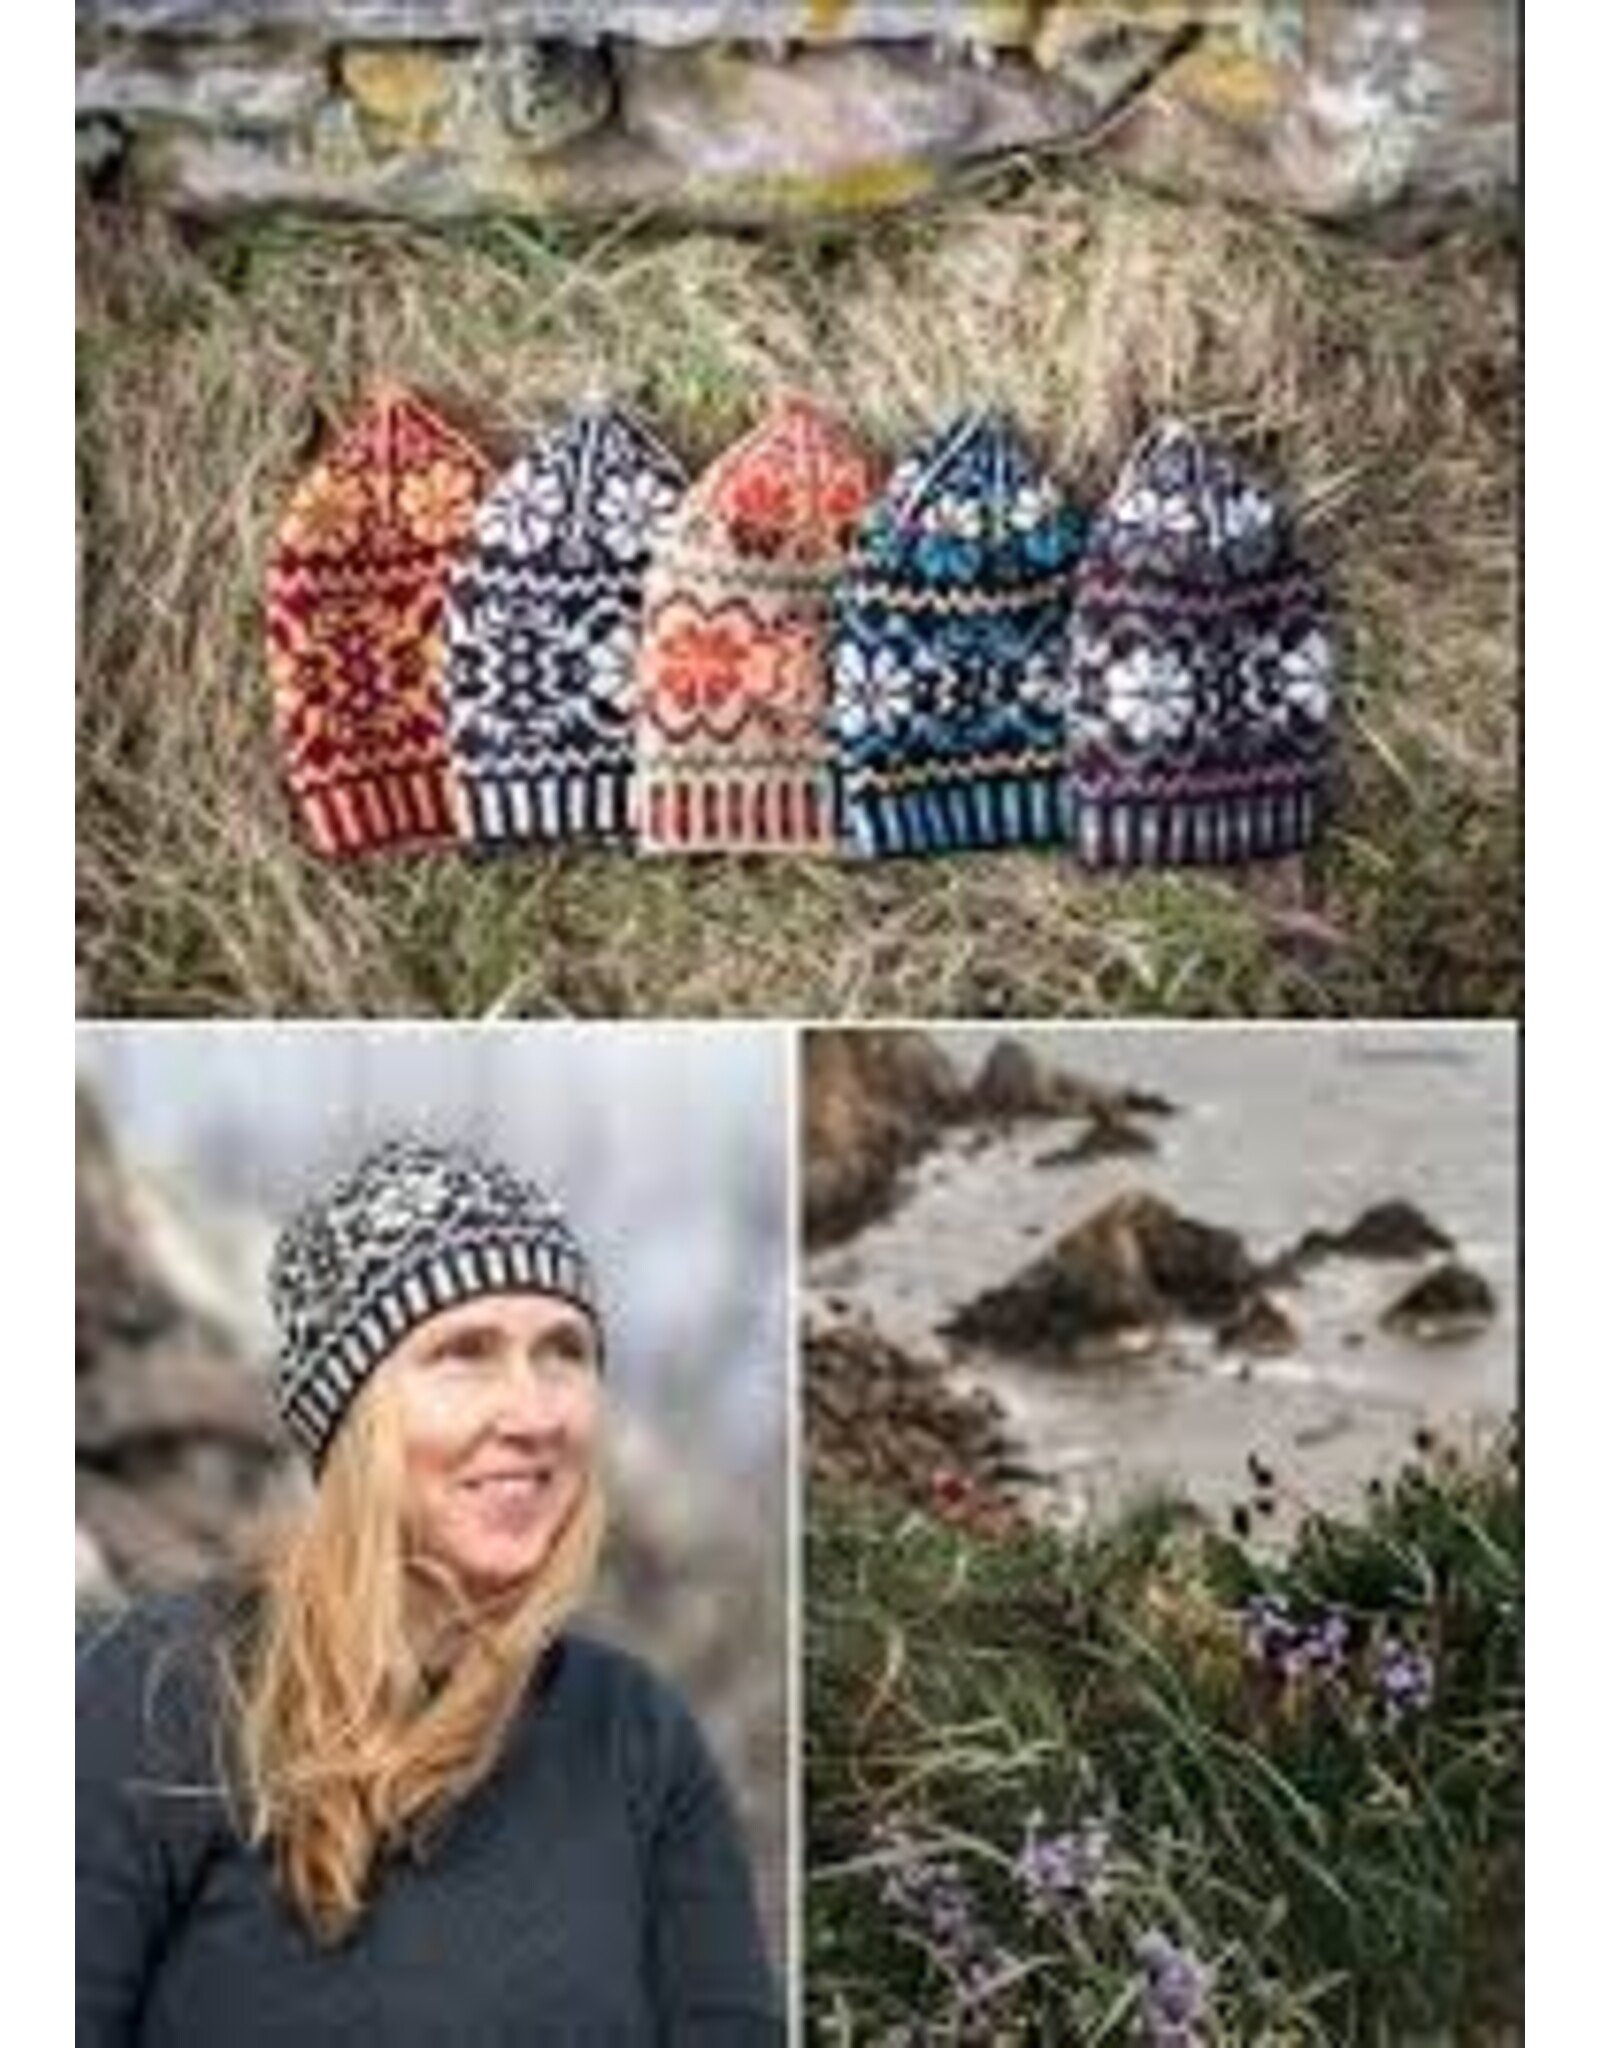 Jamieson's of Shetland Buggiflooer Beanie - 2023 Shetland Wool Week's Hat